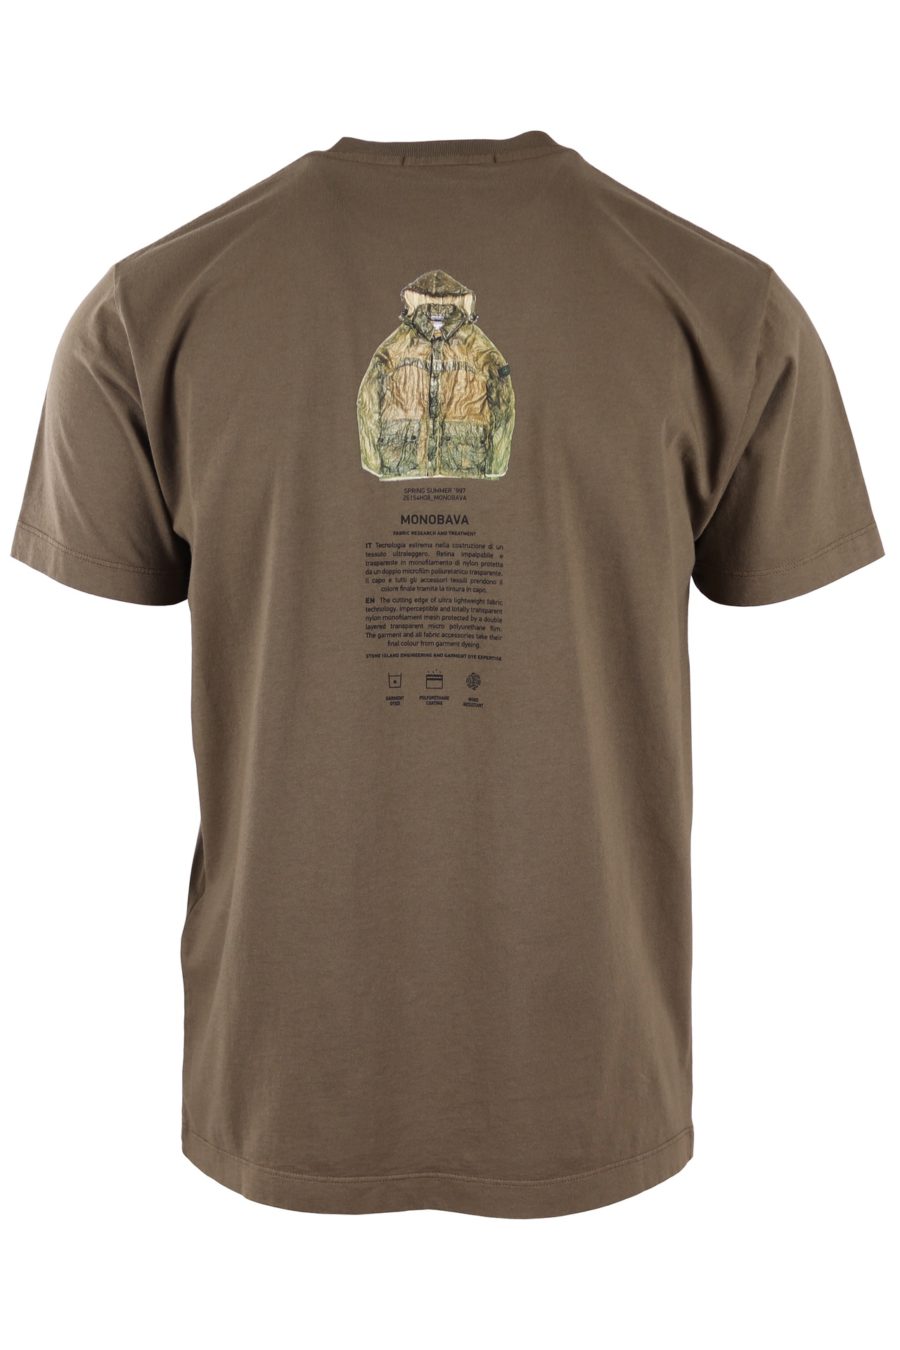 T-shirt Stone Island vert militaire avec logo "archivio" - e479b4f2340d93a5d2b6d33e1772abdc36ff26da